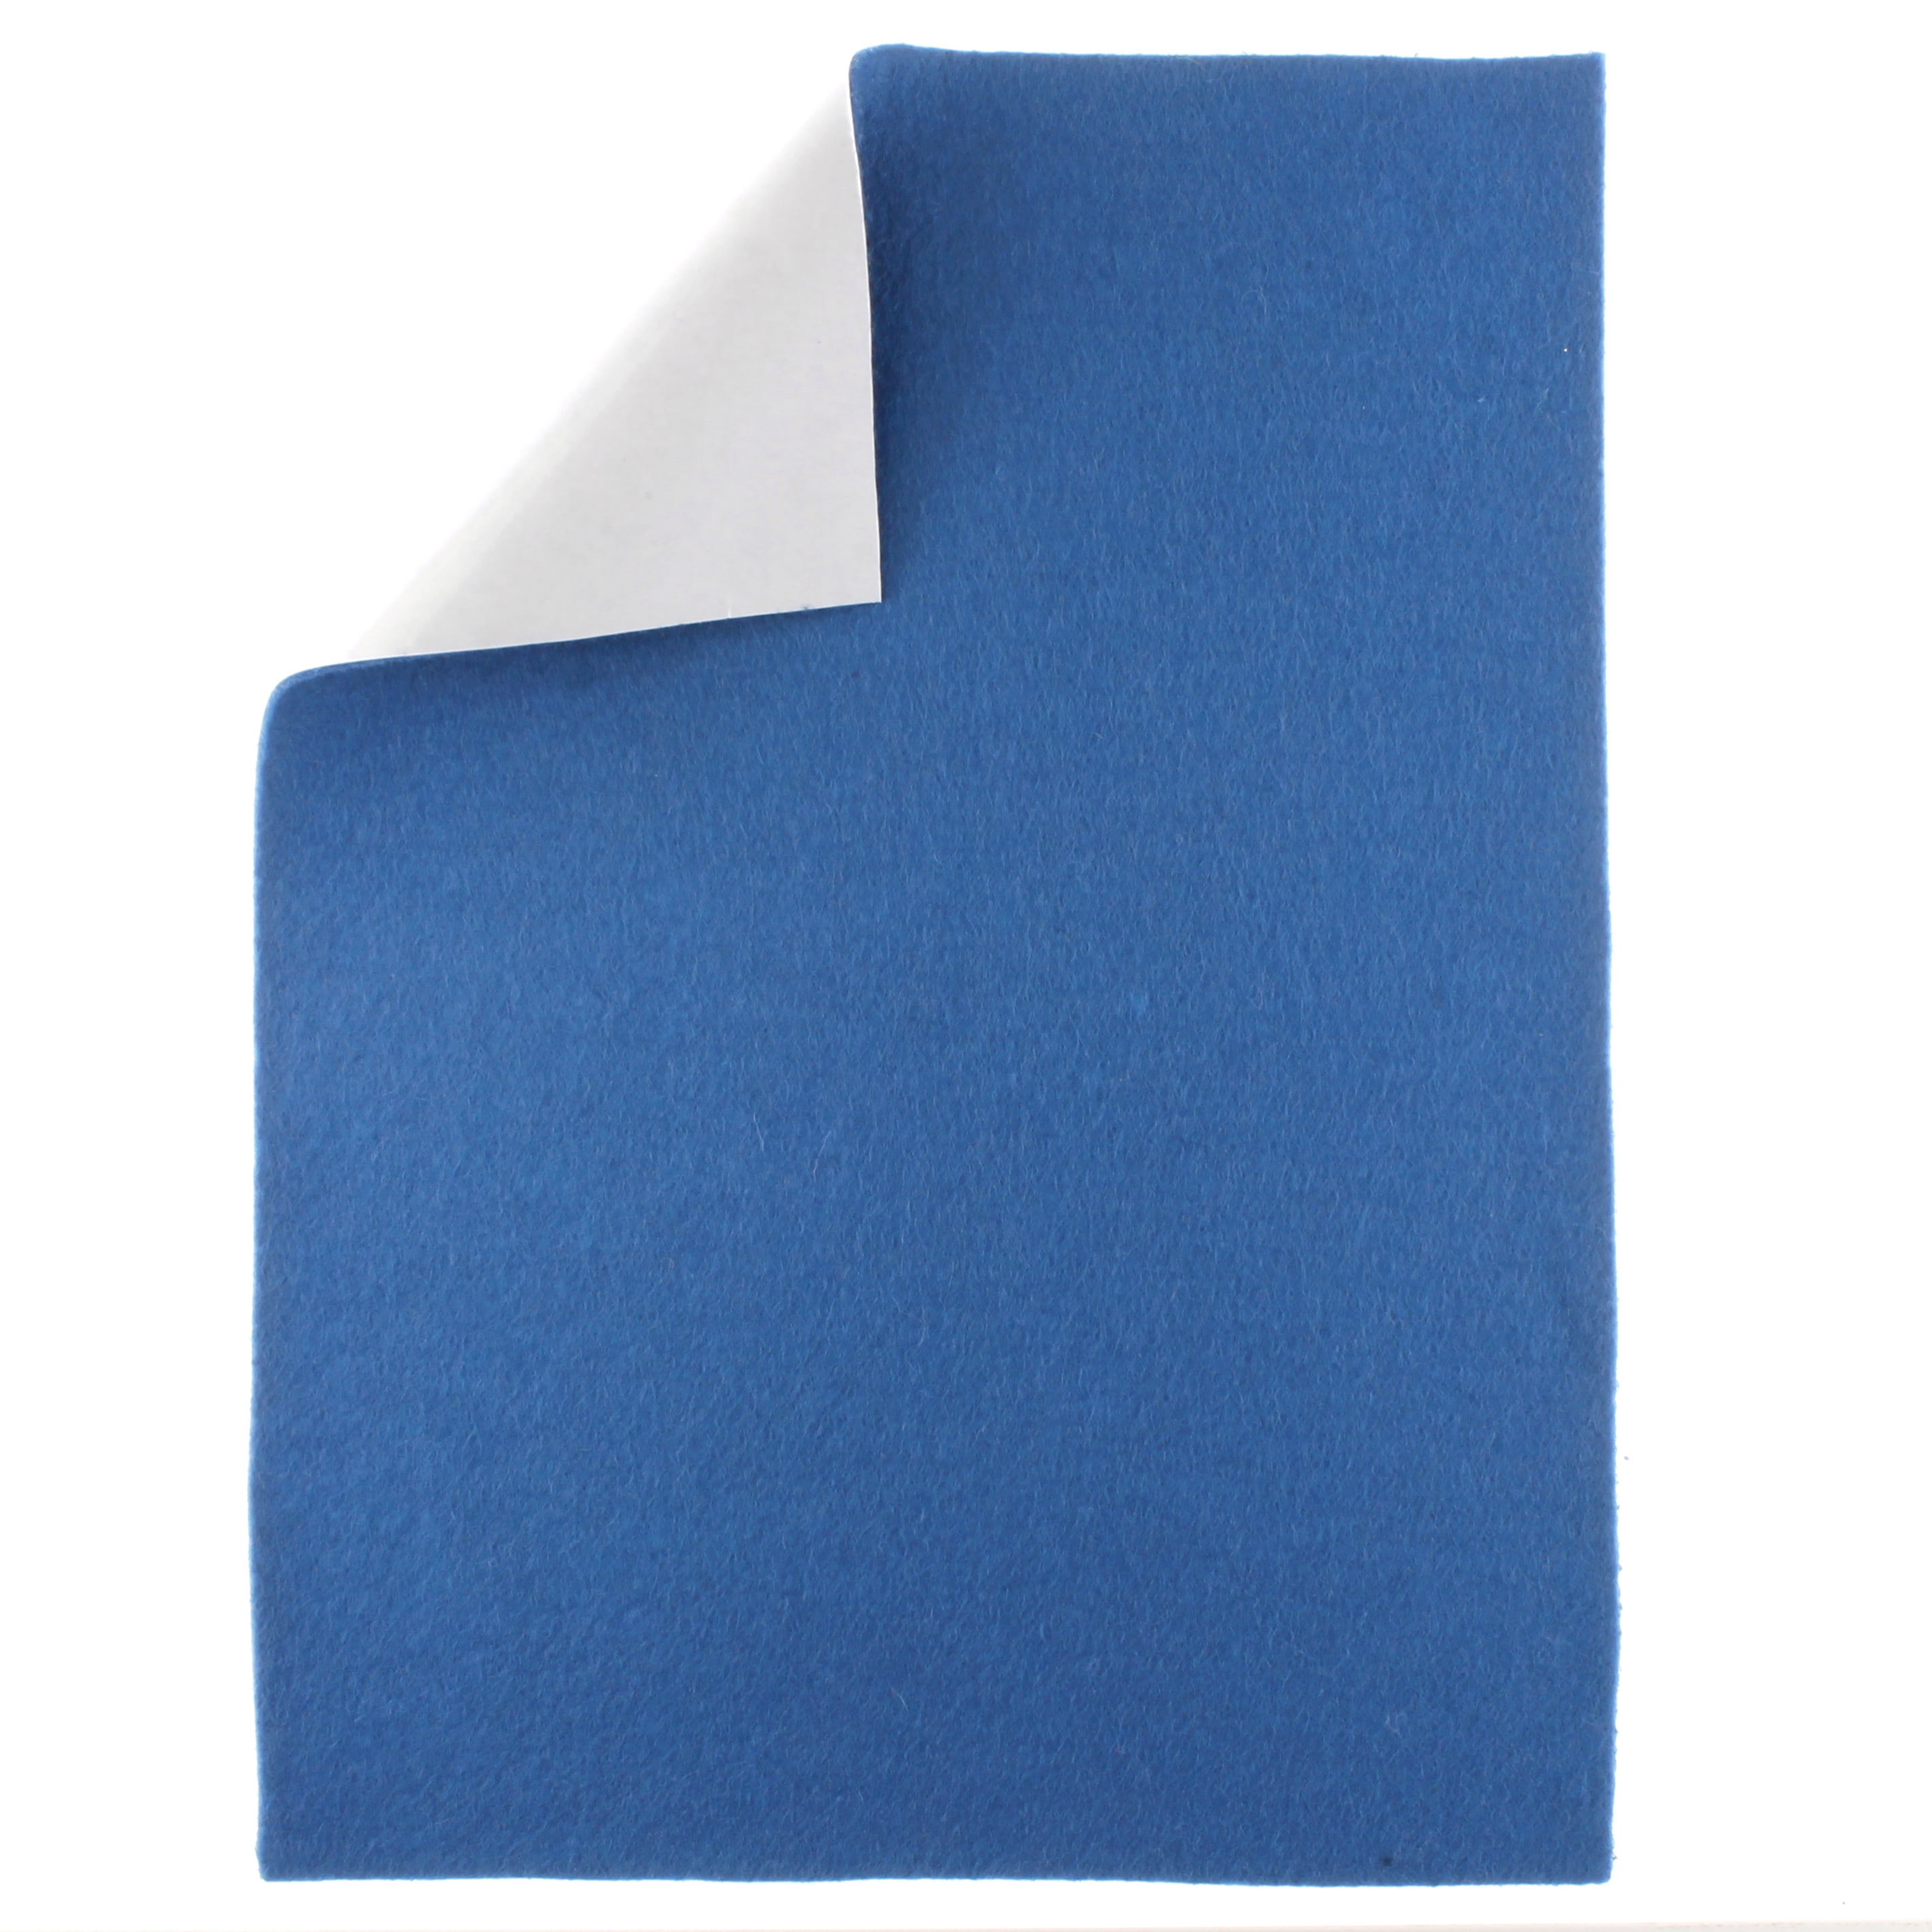 Merino Wool Blend Felt Crafting Sheets Adhesive Backed ( 8 5/8 x 11 5/8)  - Navy 